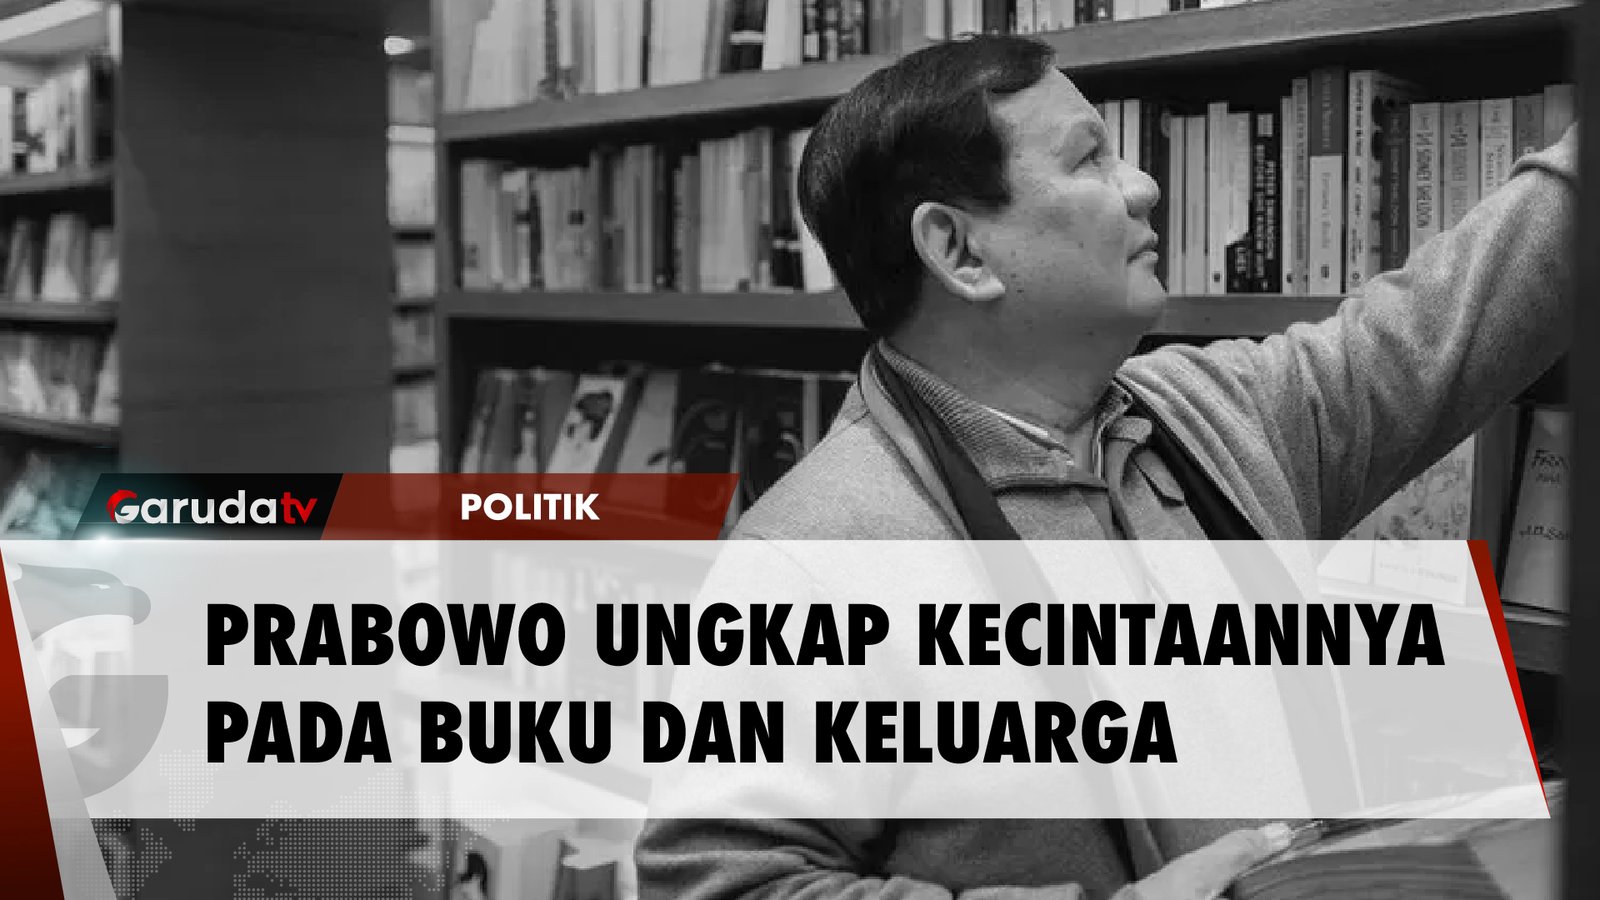 Cerita Prabowo Tentang Kecintaannya dengan Perpustakaan dan Buku